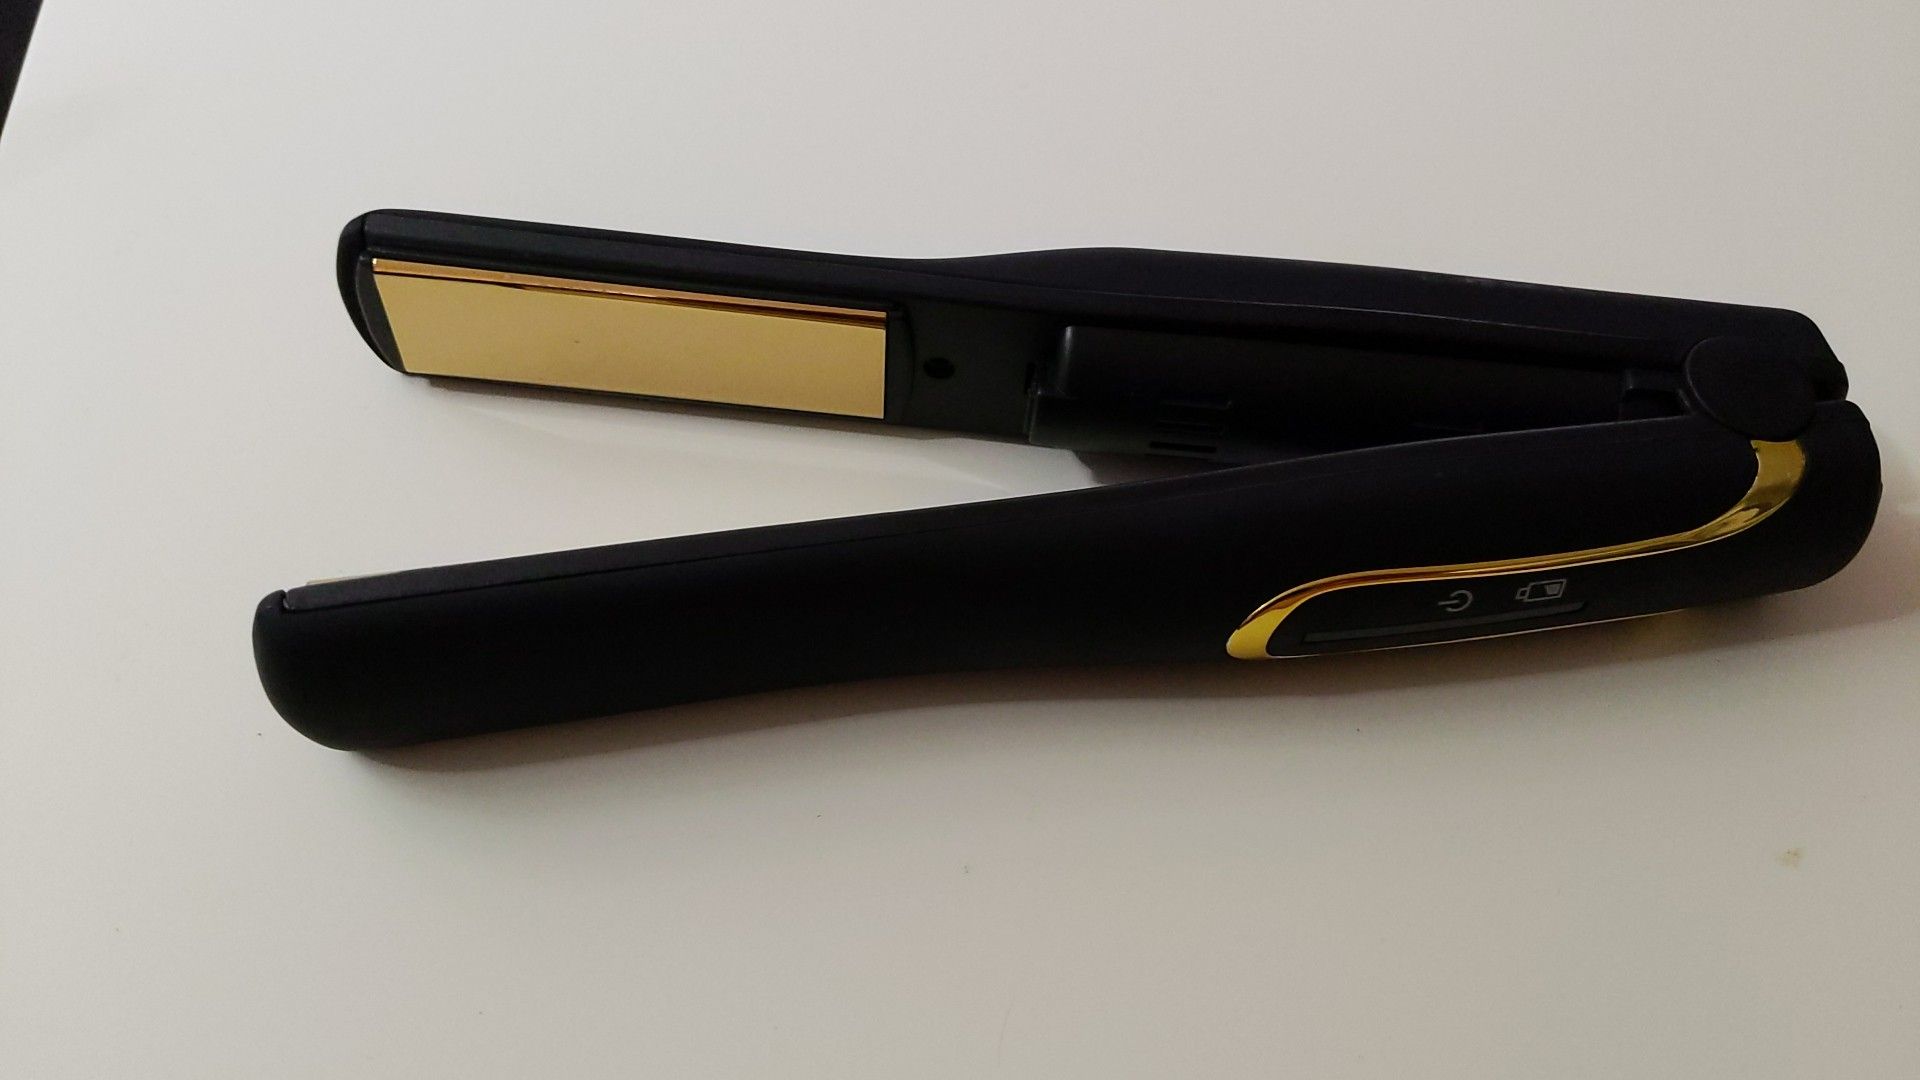 B-Qtech cordless travel flat iron hair straightener with USB charging